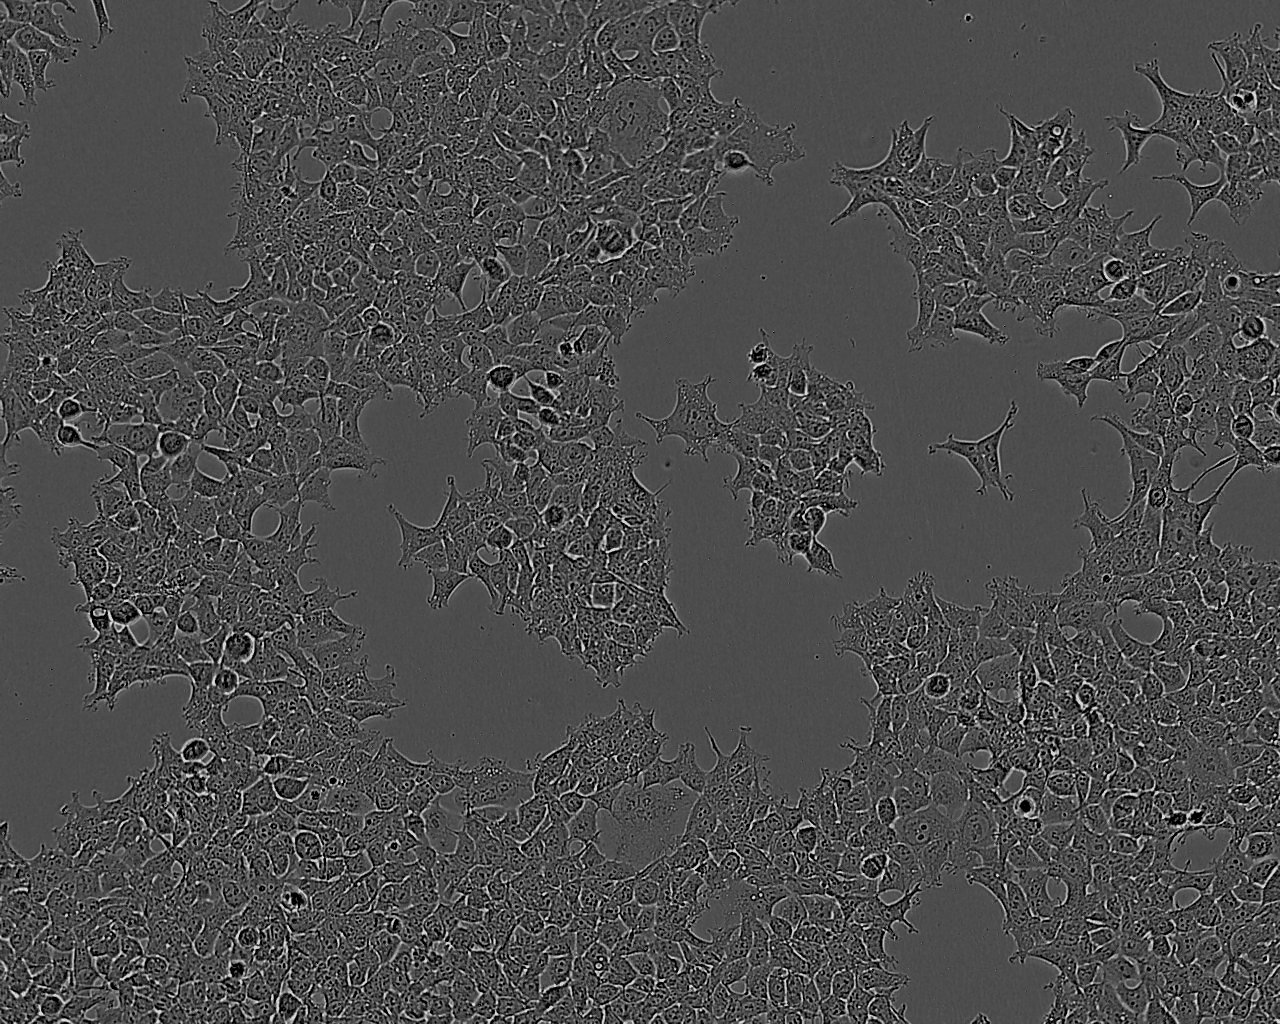 NCI-H1385 Cell:人肺癌细胞系,NCI-H1385 Cell